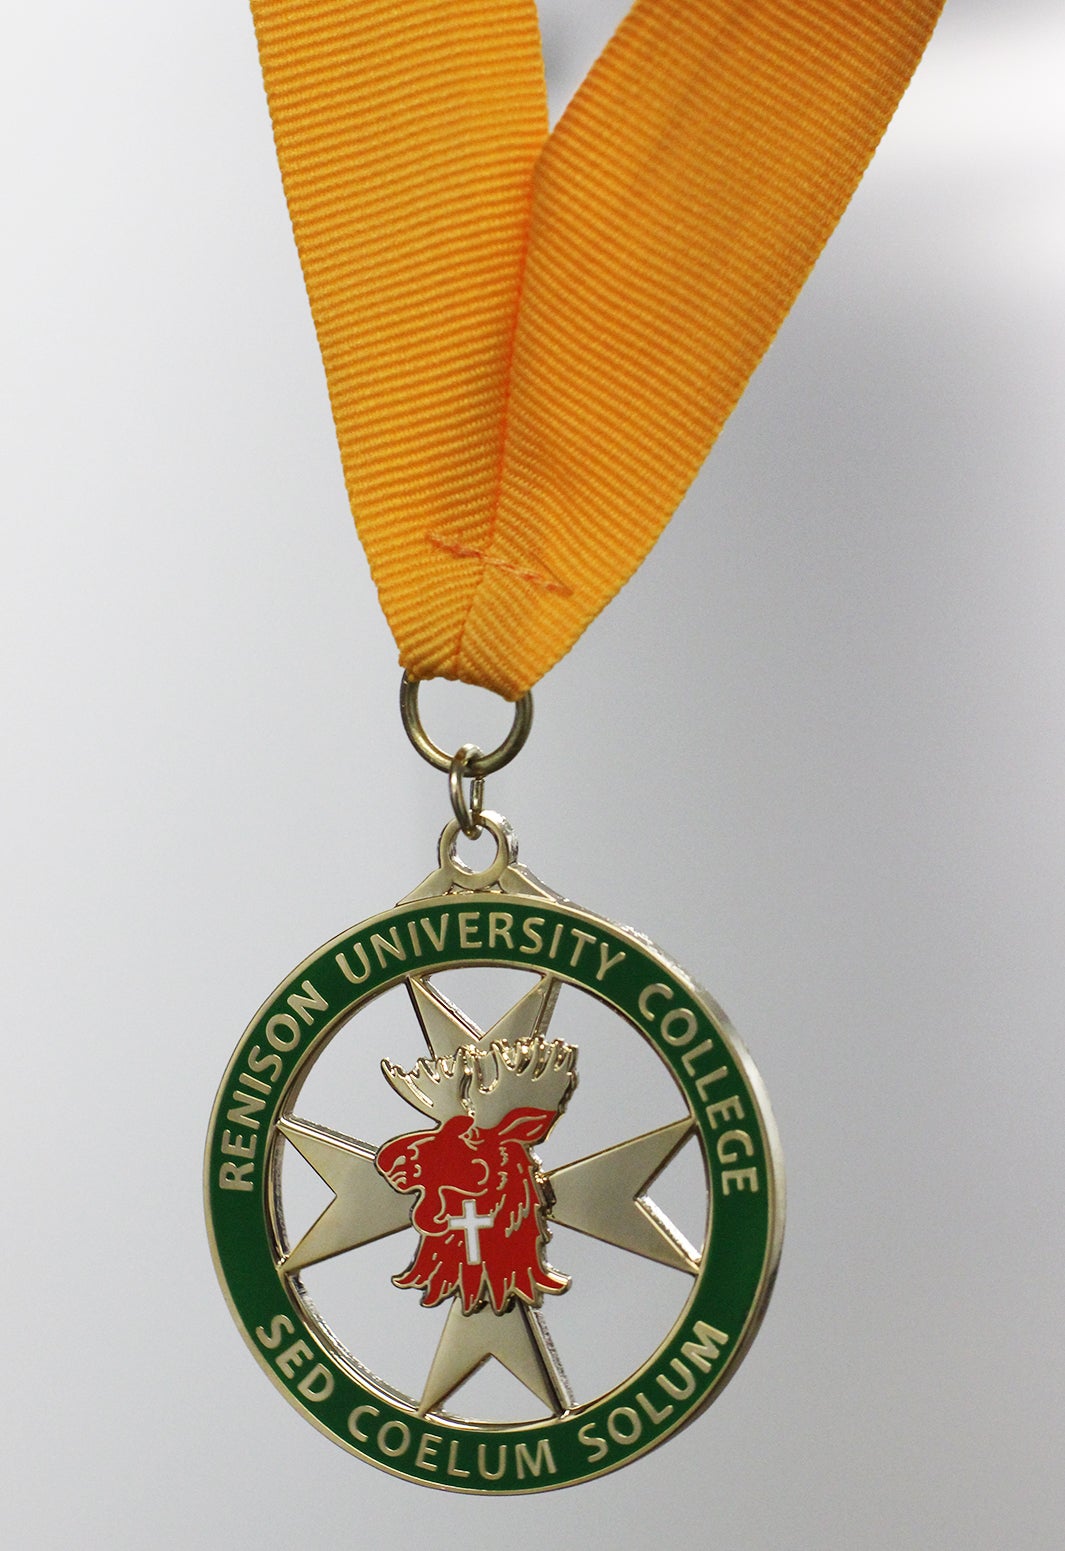 Distinguished Alumnus Medal